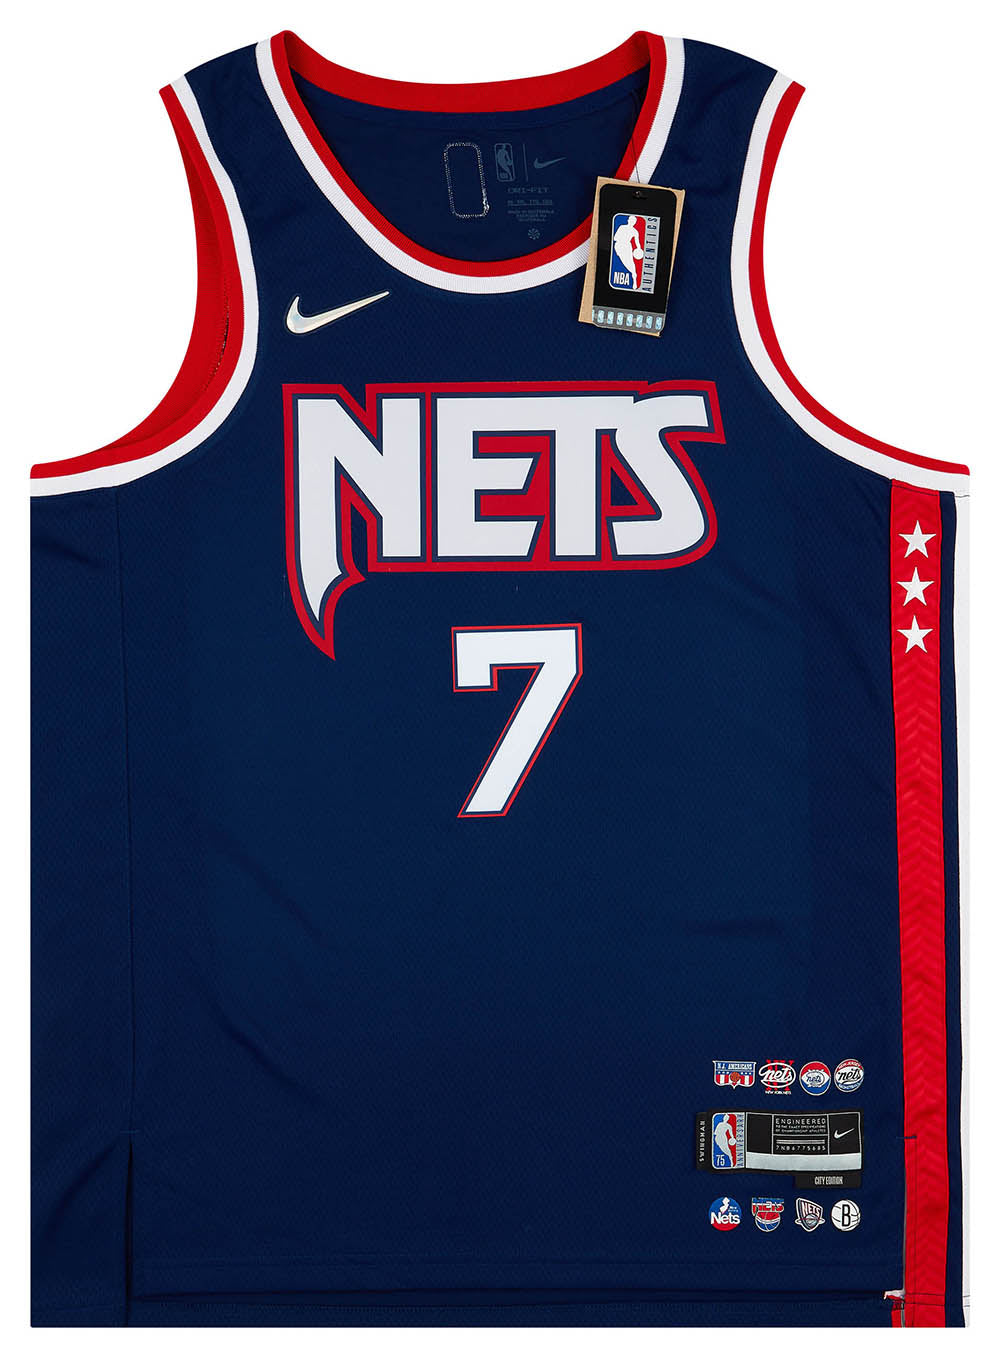 New York Knicks Alternate Uniform